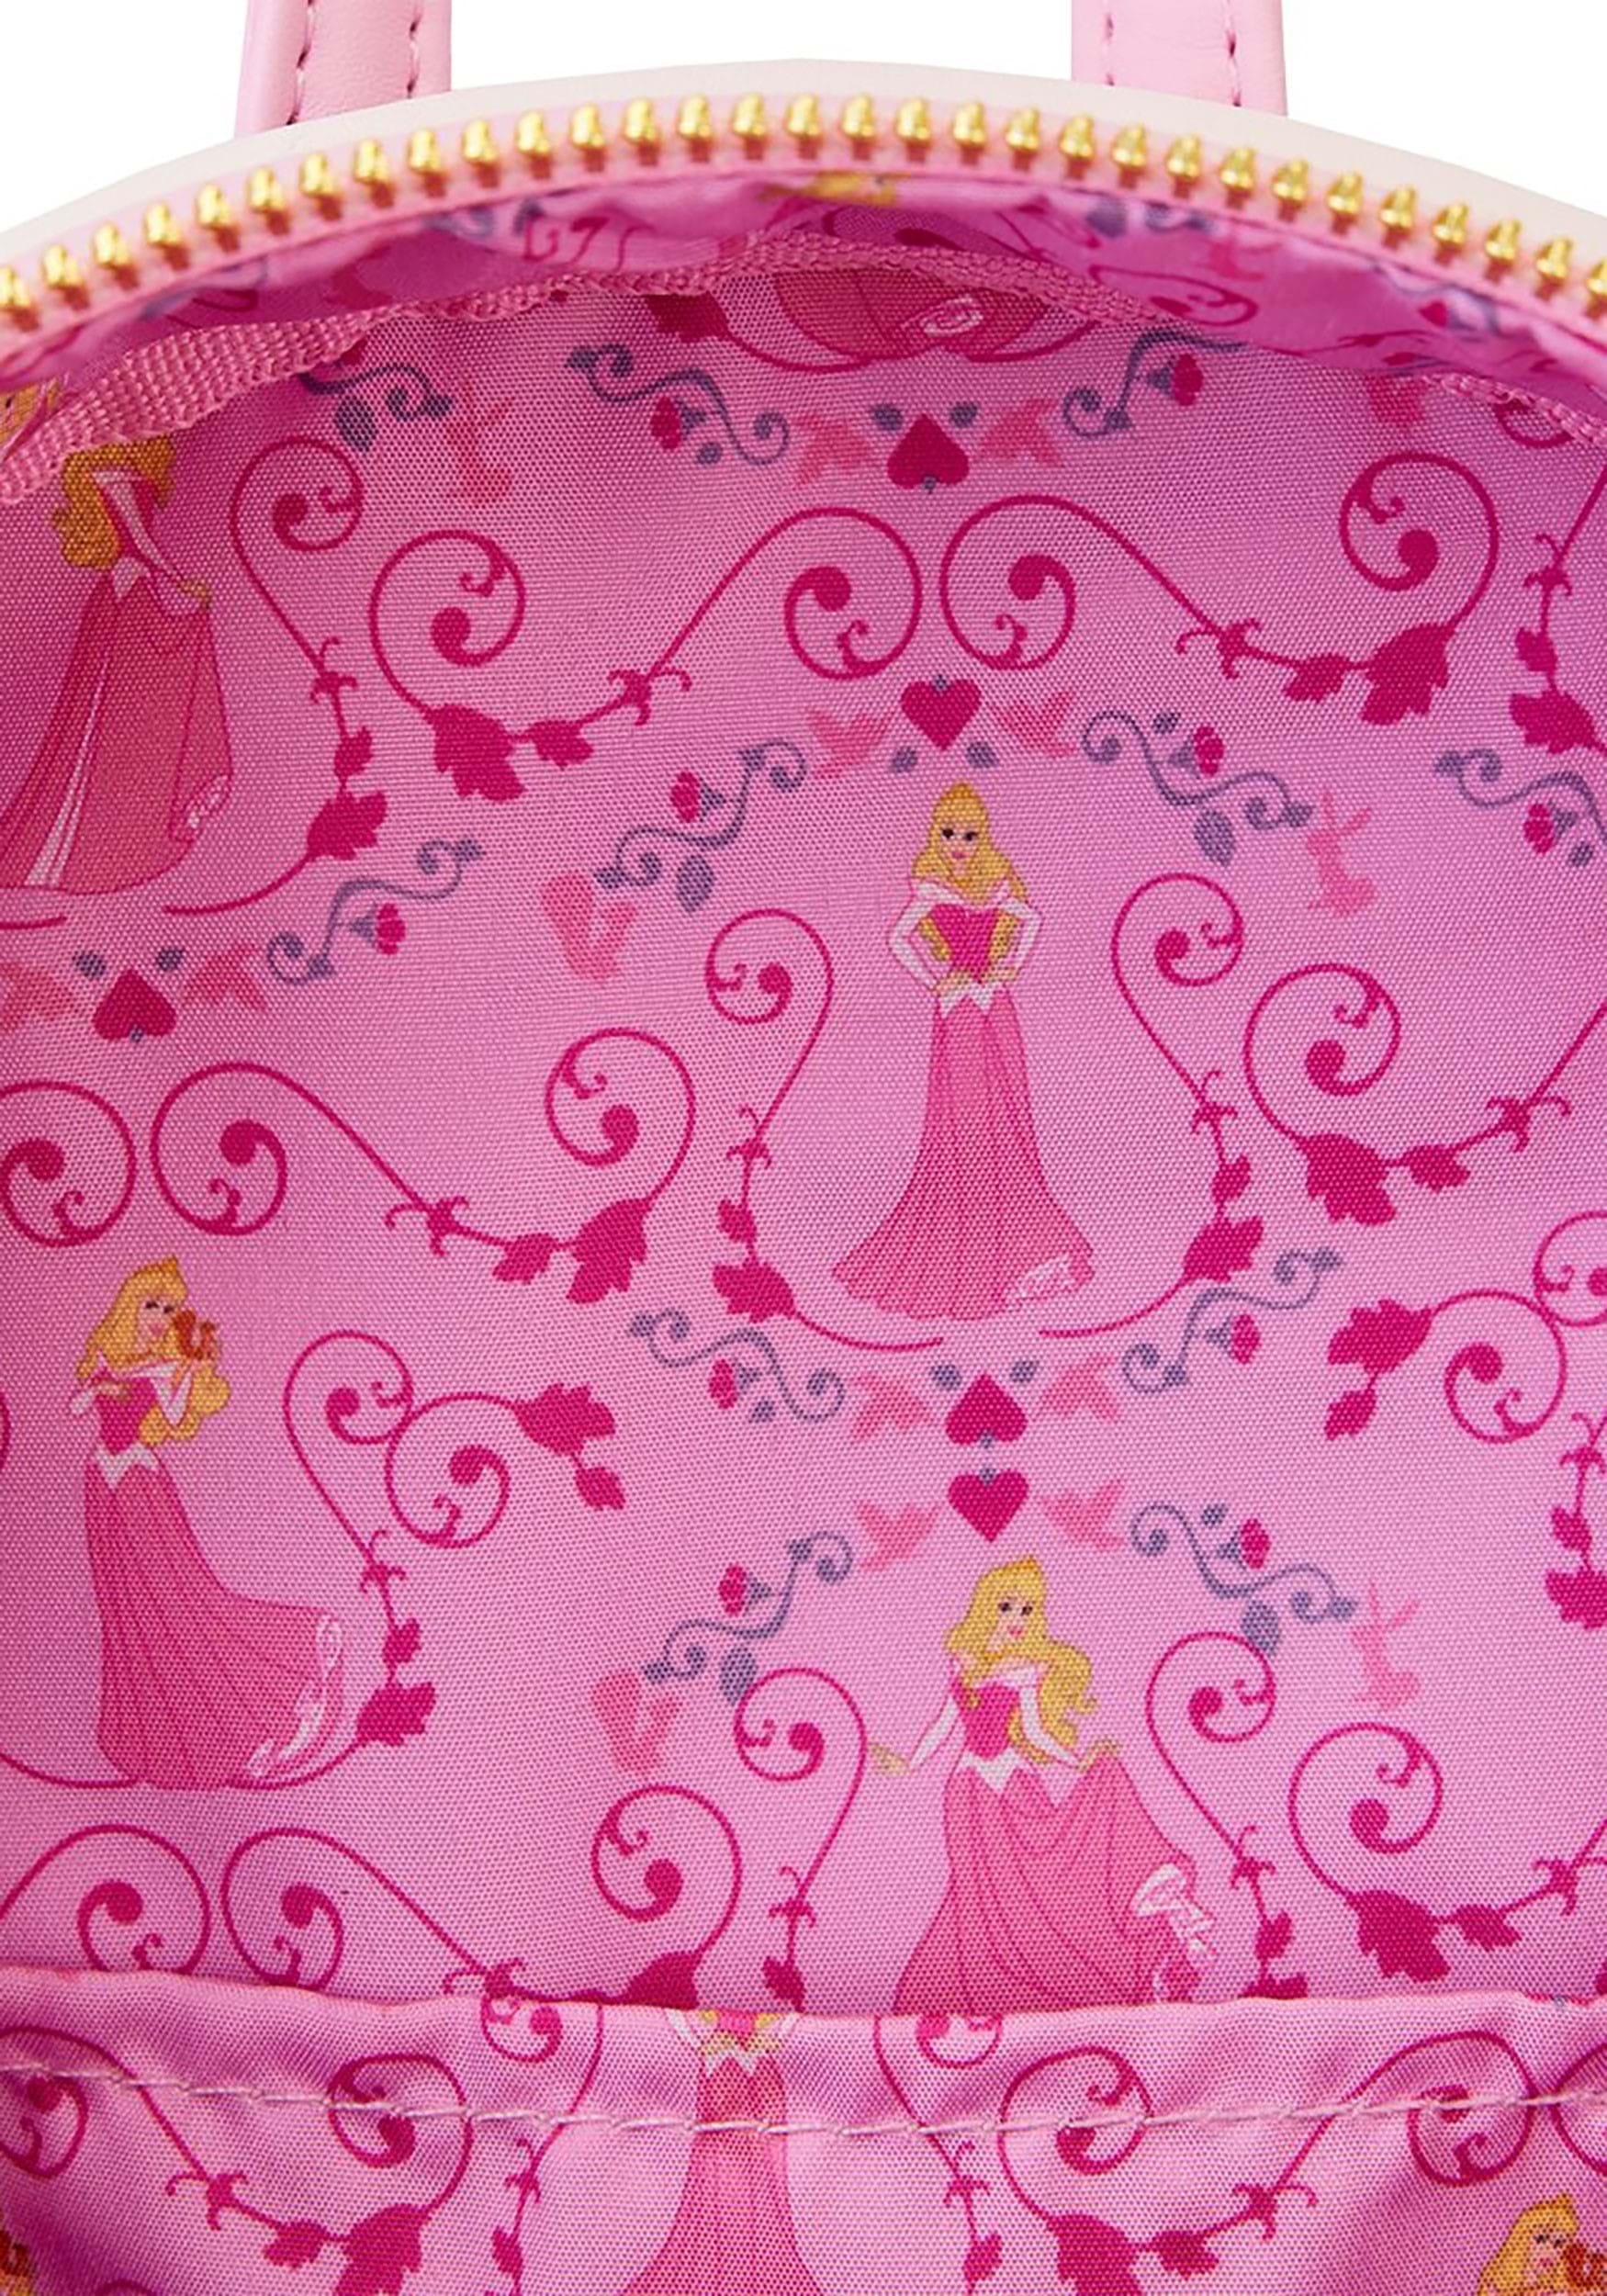 Buy Sleeping Beauty Princess Series Lenticular Zip Around Wristlet